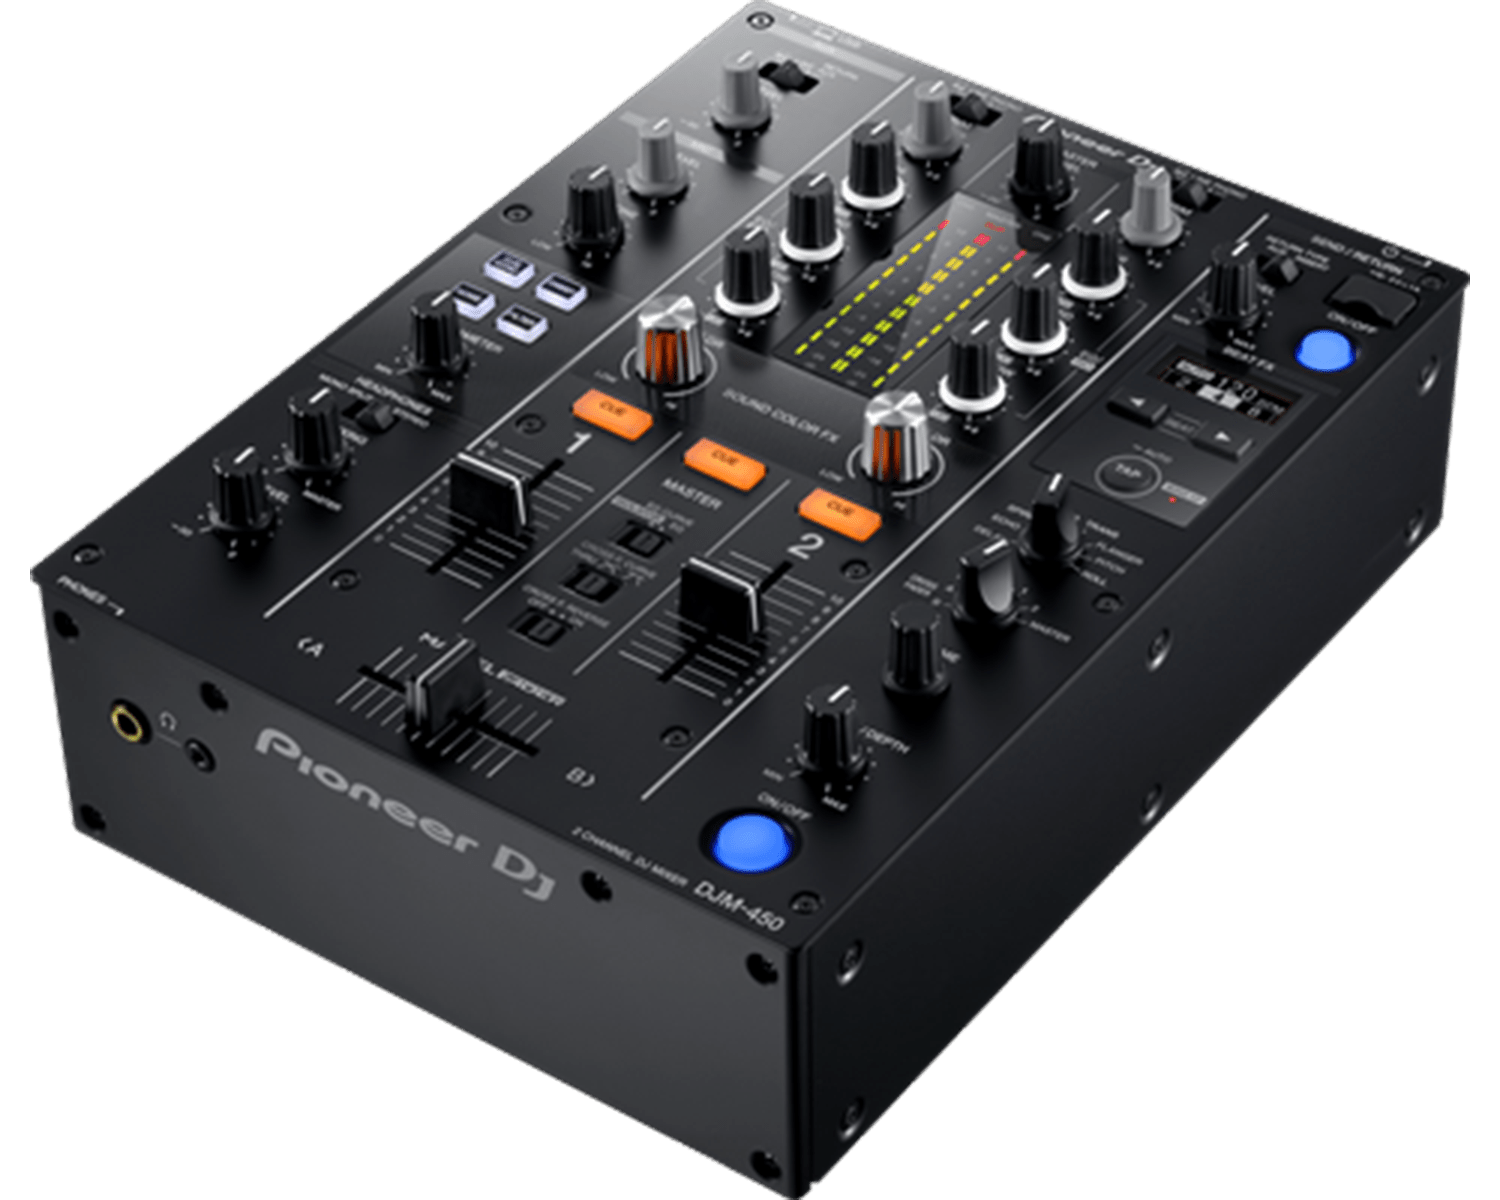 Pioneer DJ DJM-450 2-Channel DJ Mixer with Beat FX - Hollywood DJ